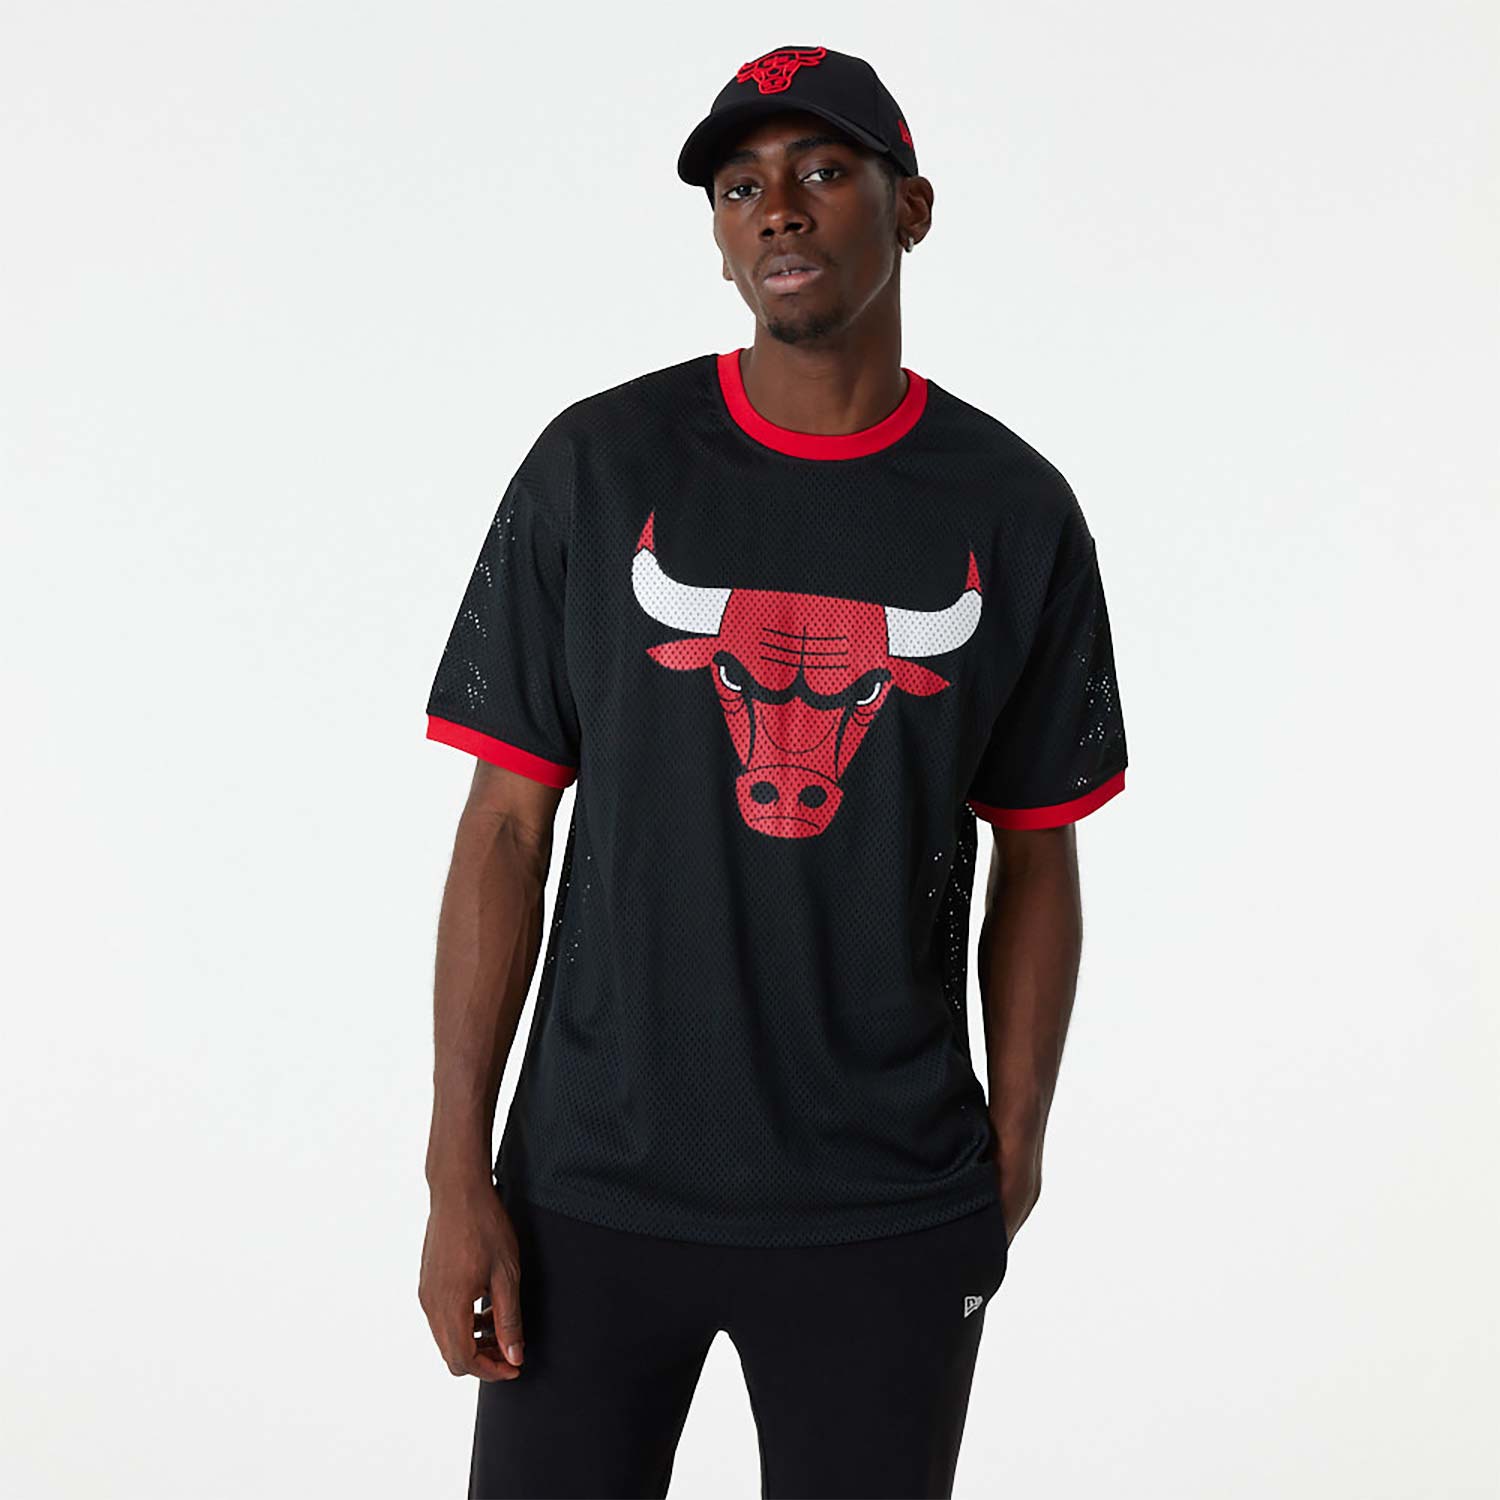 chicago bulls t shirt black